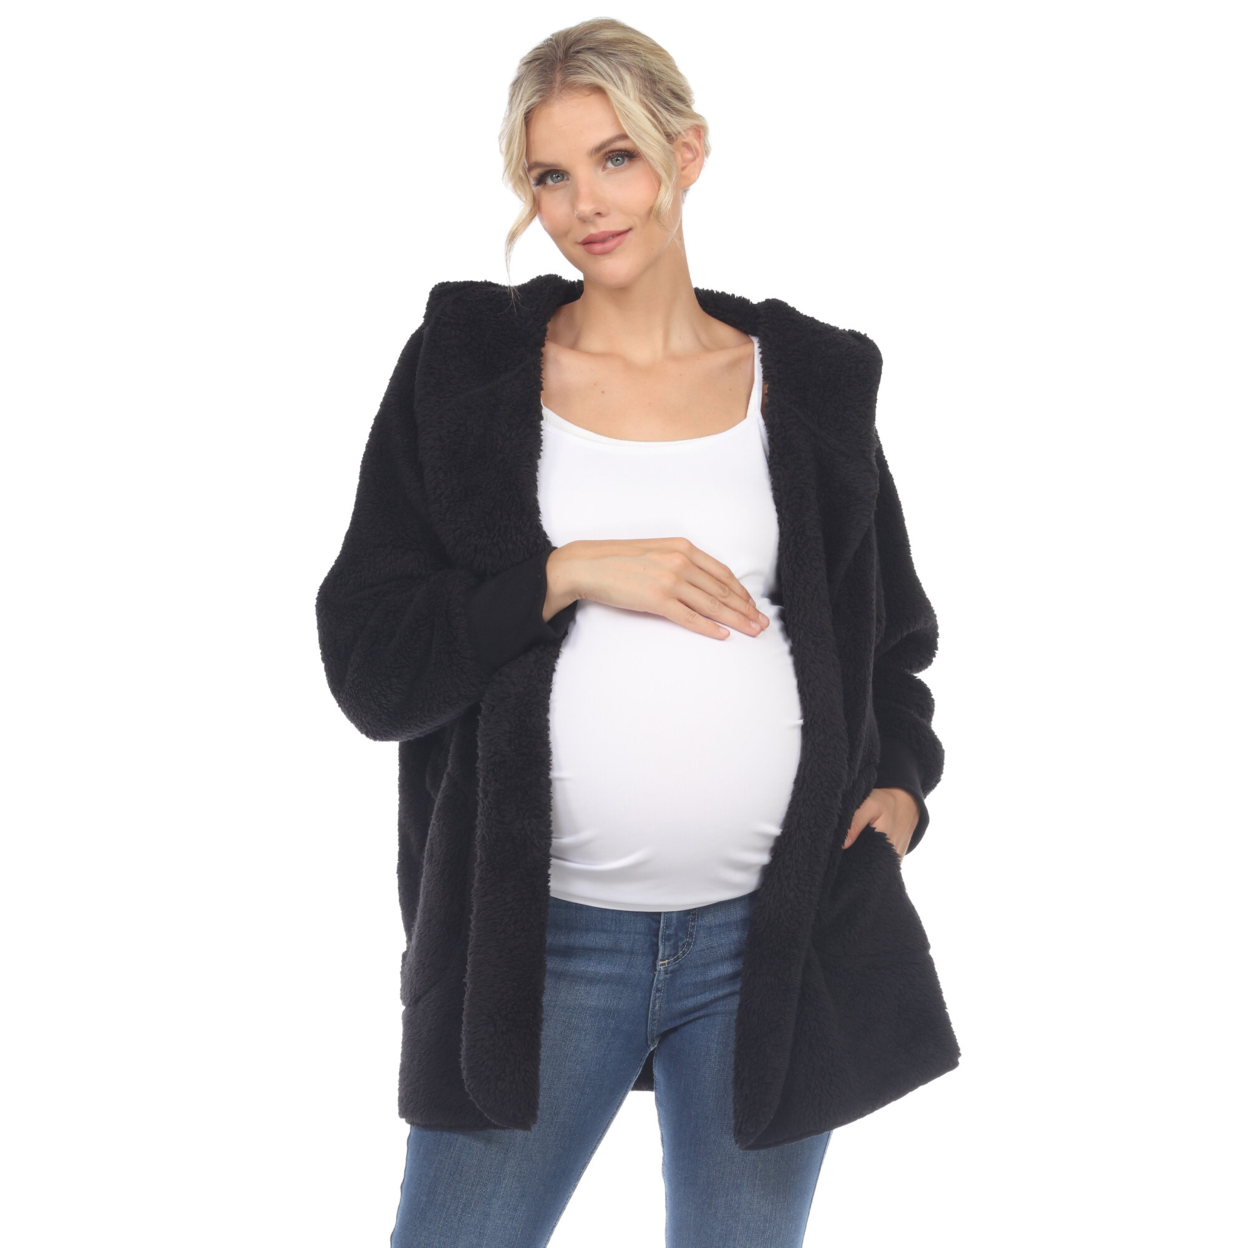 White Mark Womenâs Maternity Plush Hooded Cardigan With Pockets - Black, 1X/2X